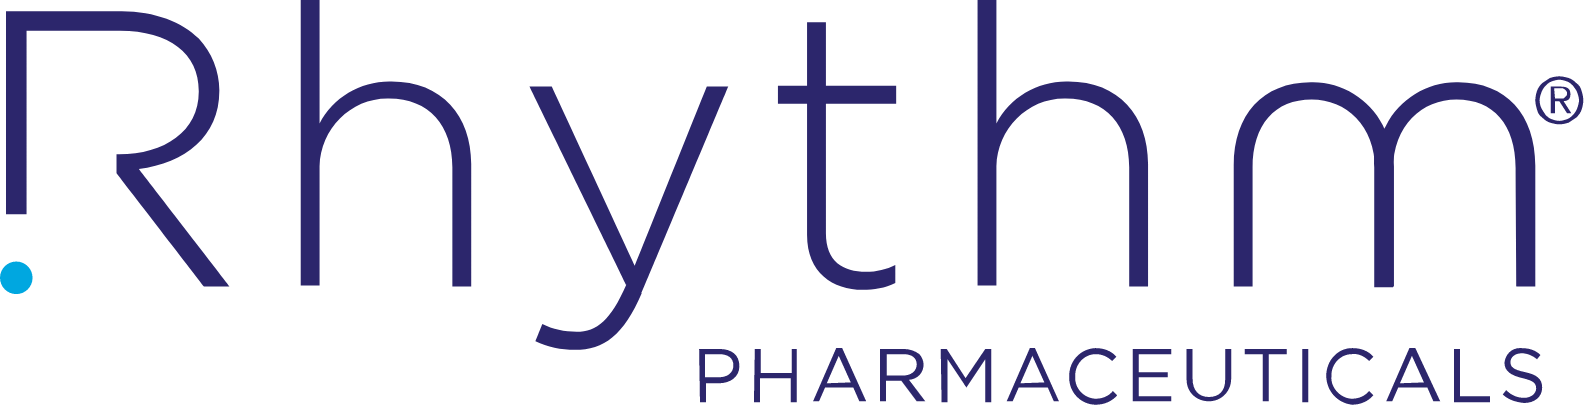 Rhythm Pharmaceuticals logo large (transparent PNG)